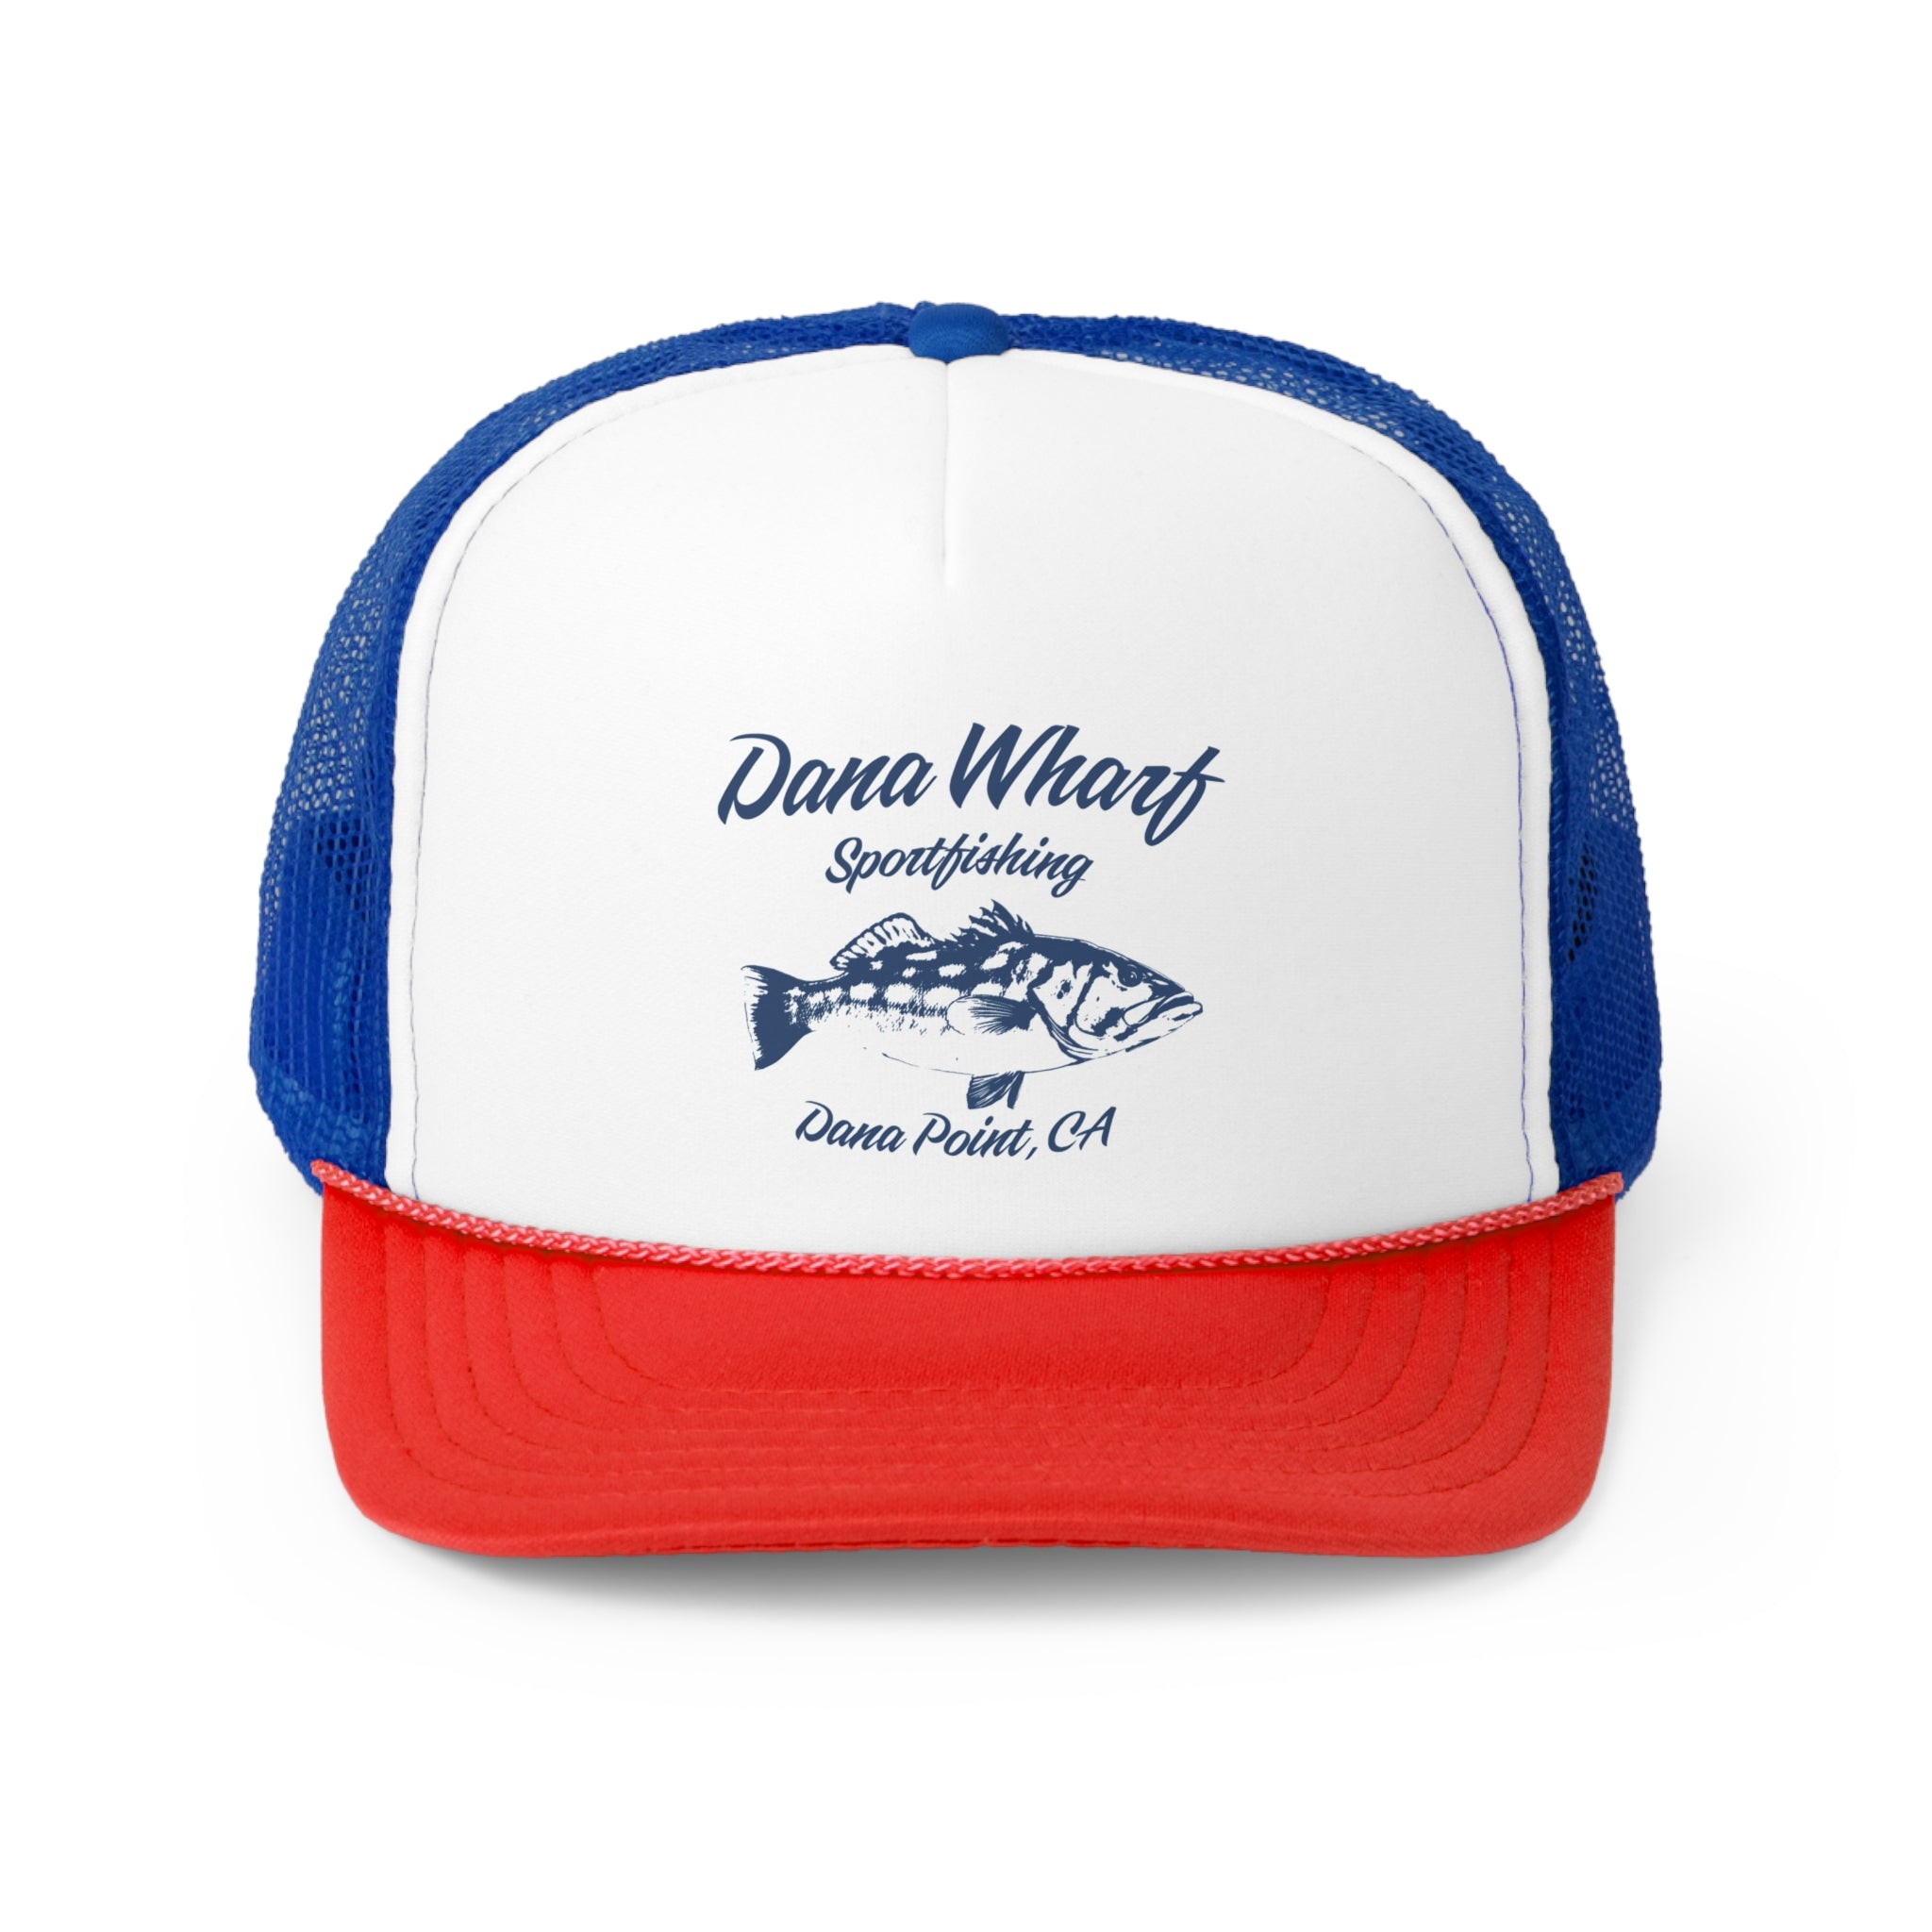 Dana Wharf Sportfishing Trucker Caps Blue/Red / One Size